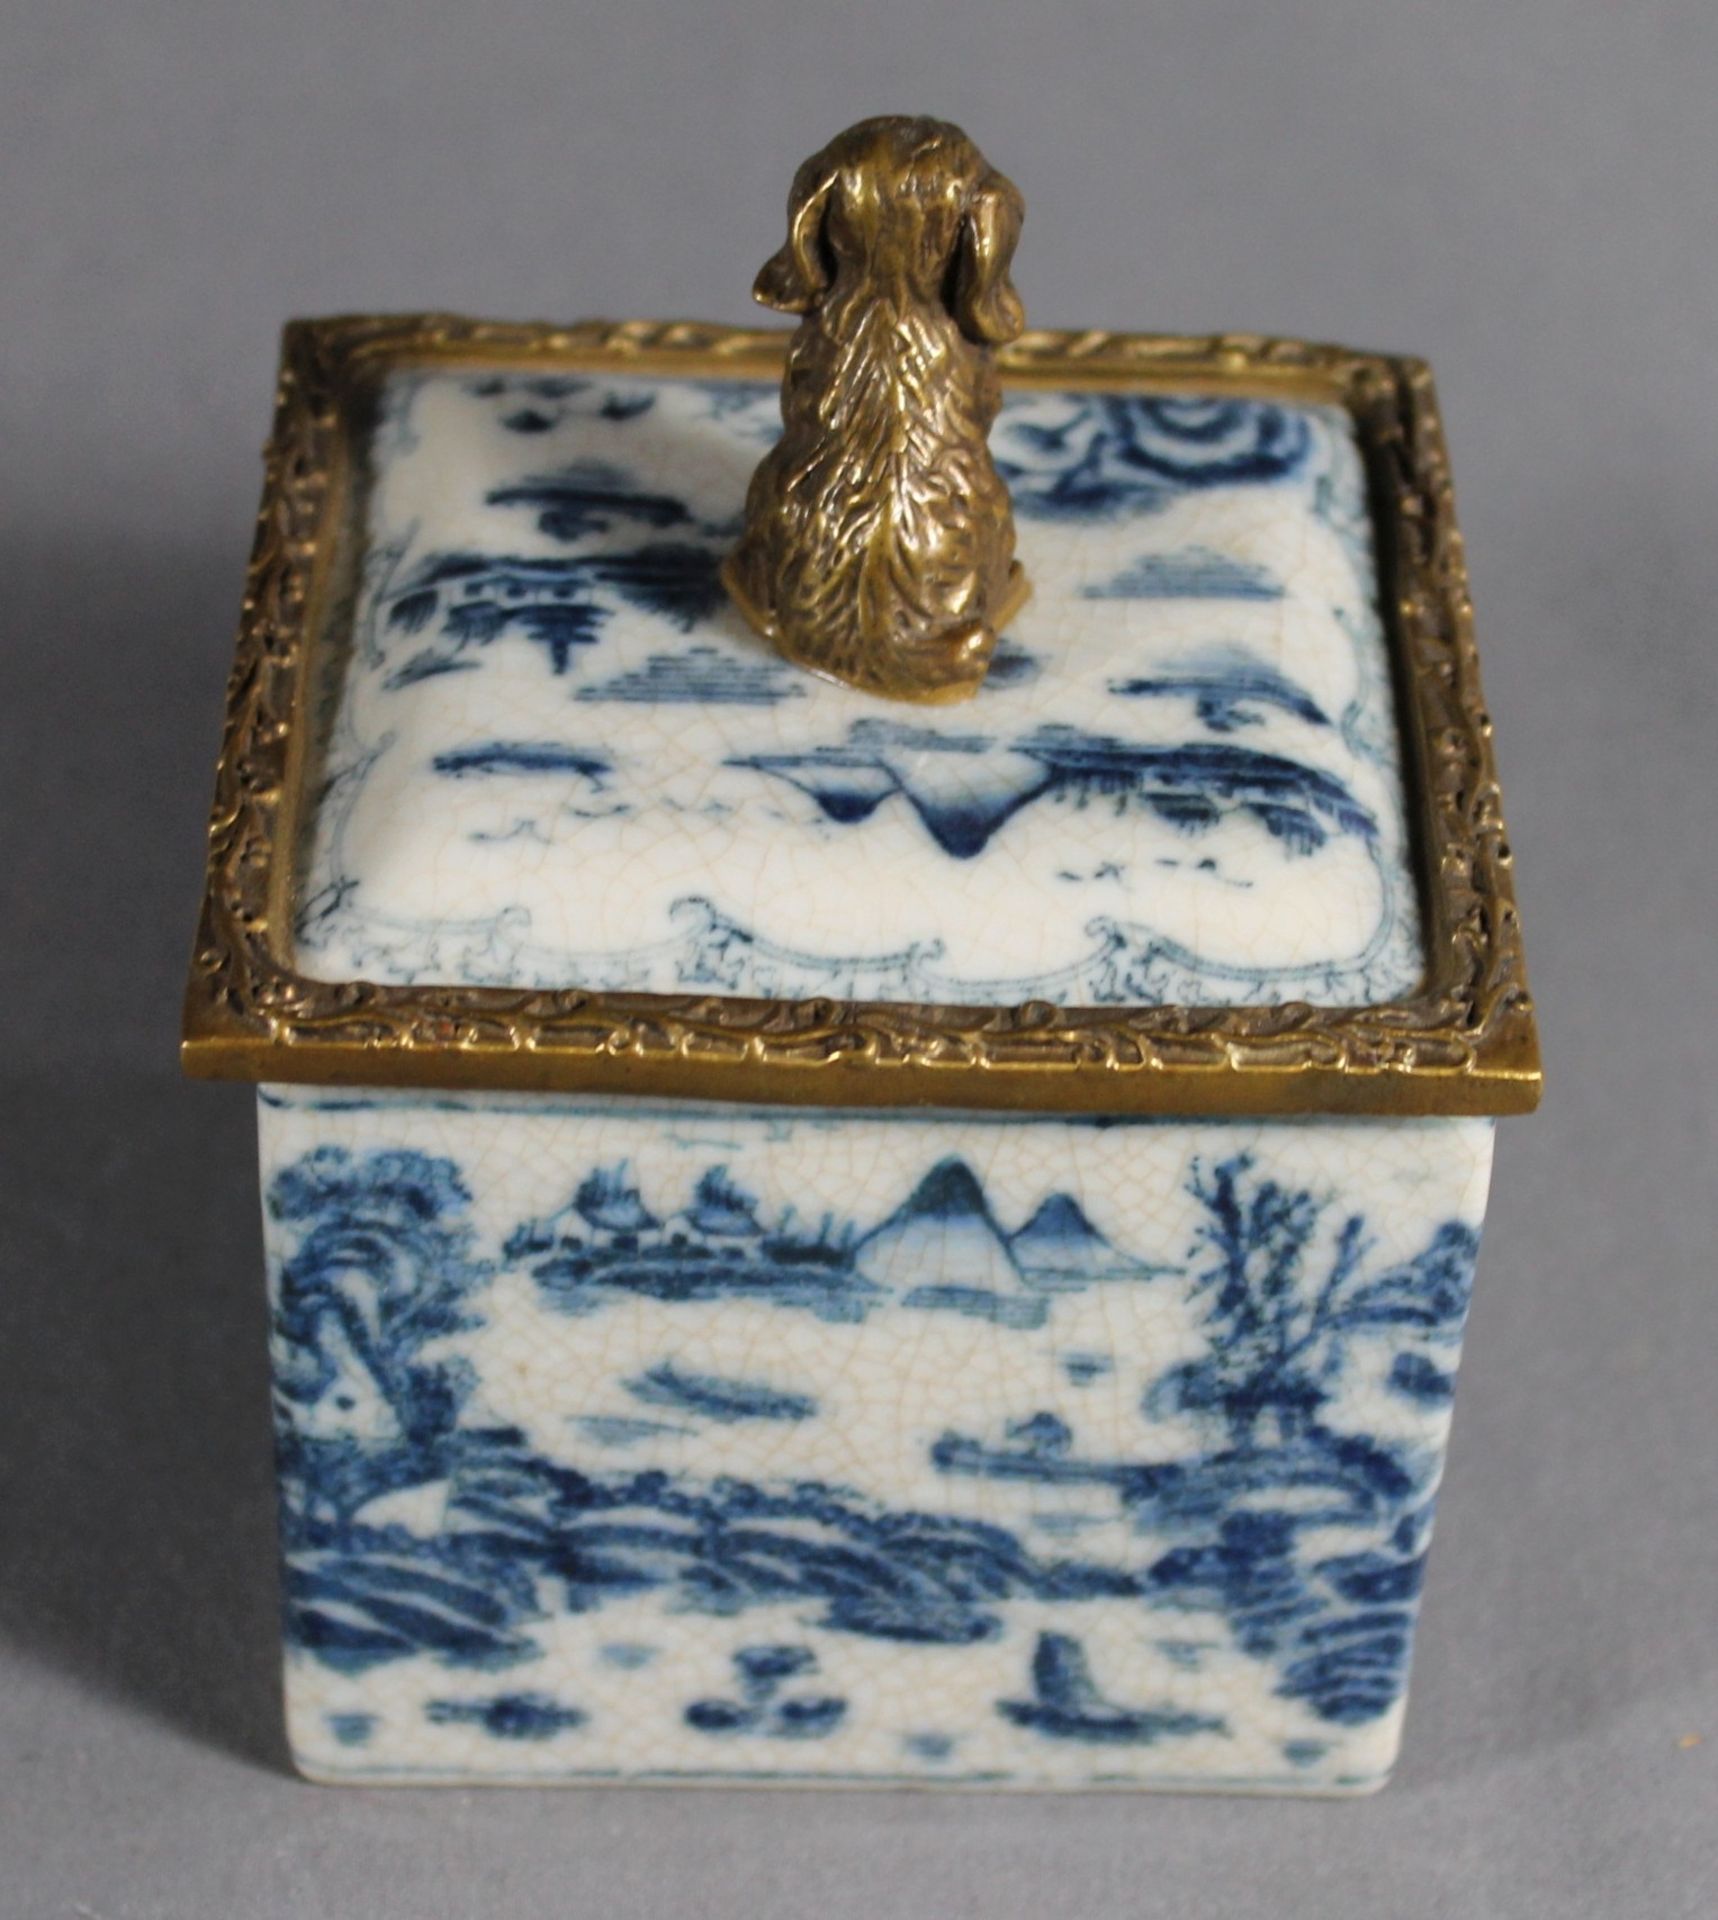 1 quadratische Deckeldose Keramik, Wandung und Deckel mit blauem Landschaftsdekor, Deckel in Messing - Image 3 of 3